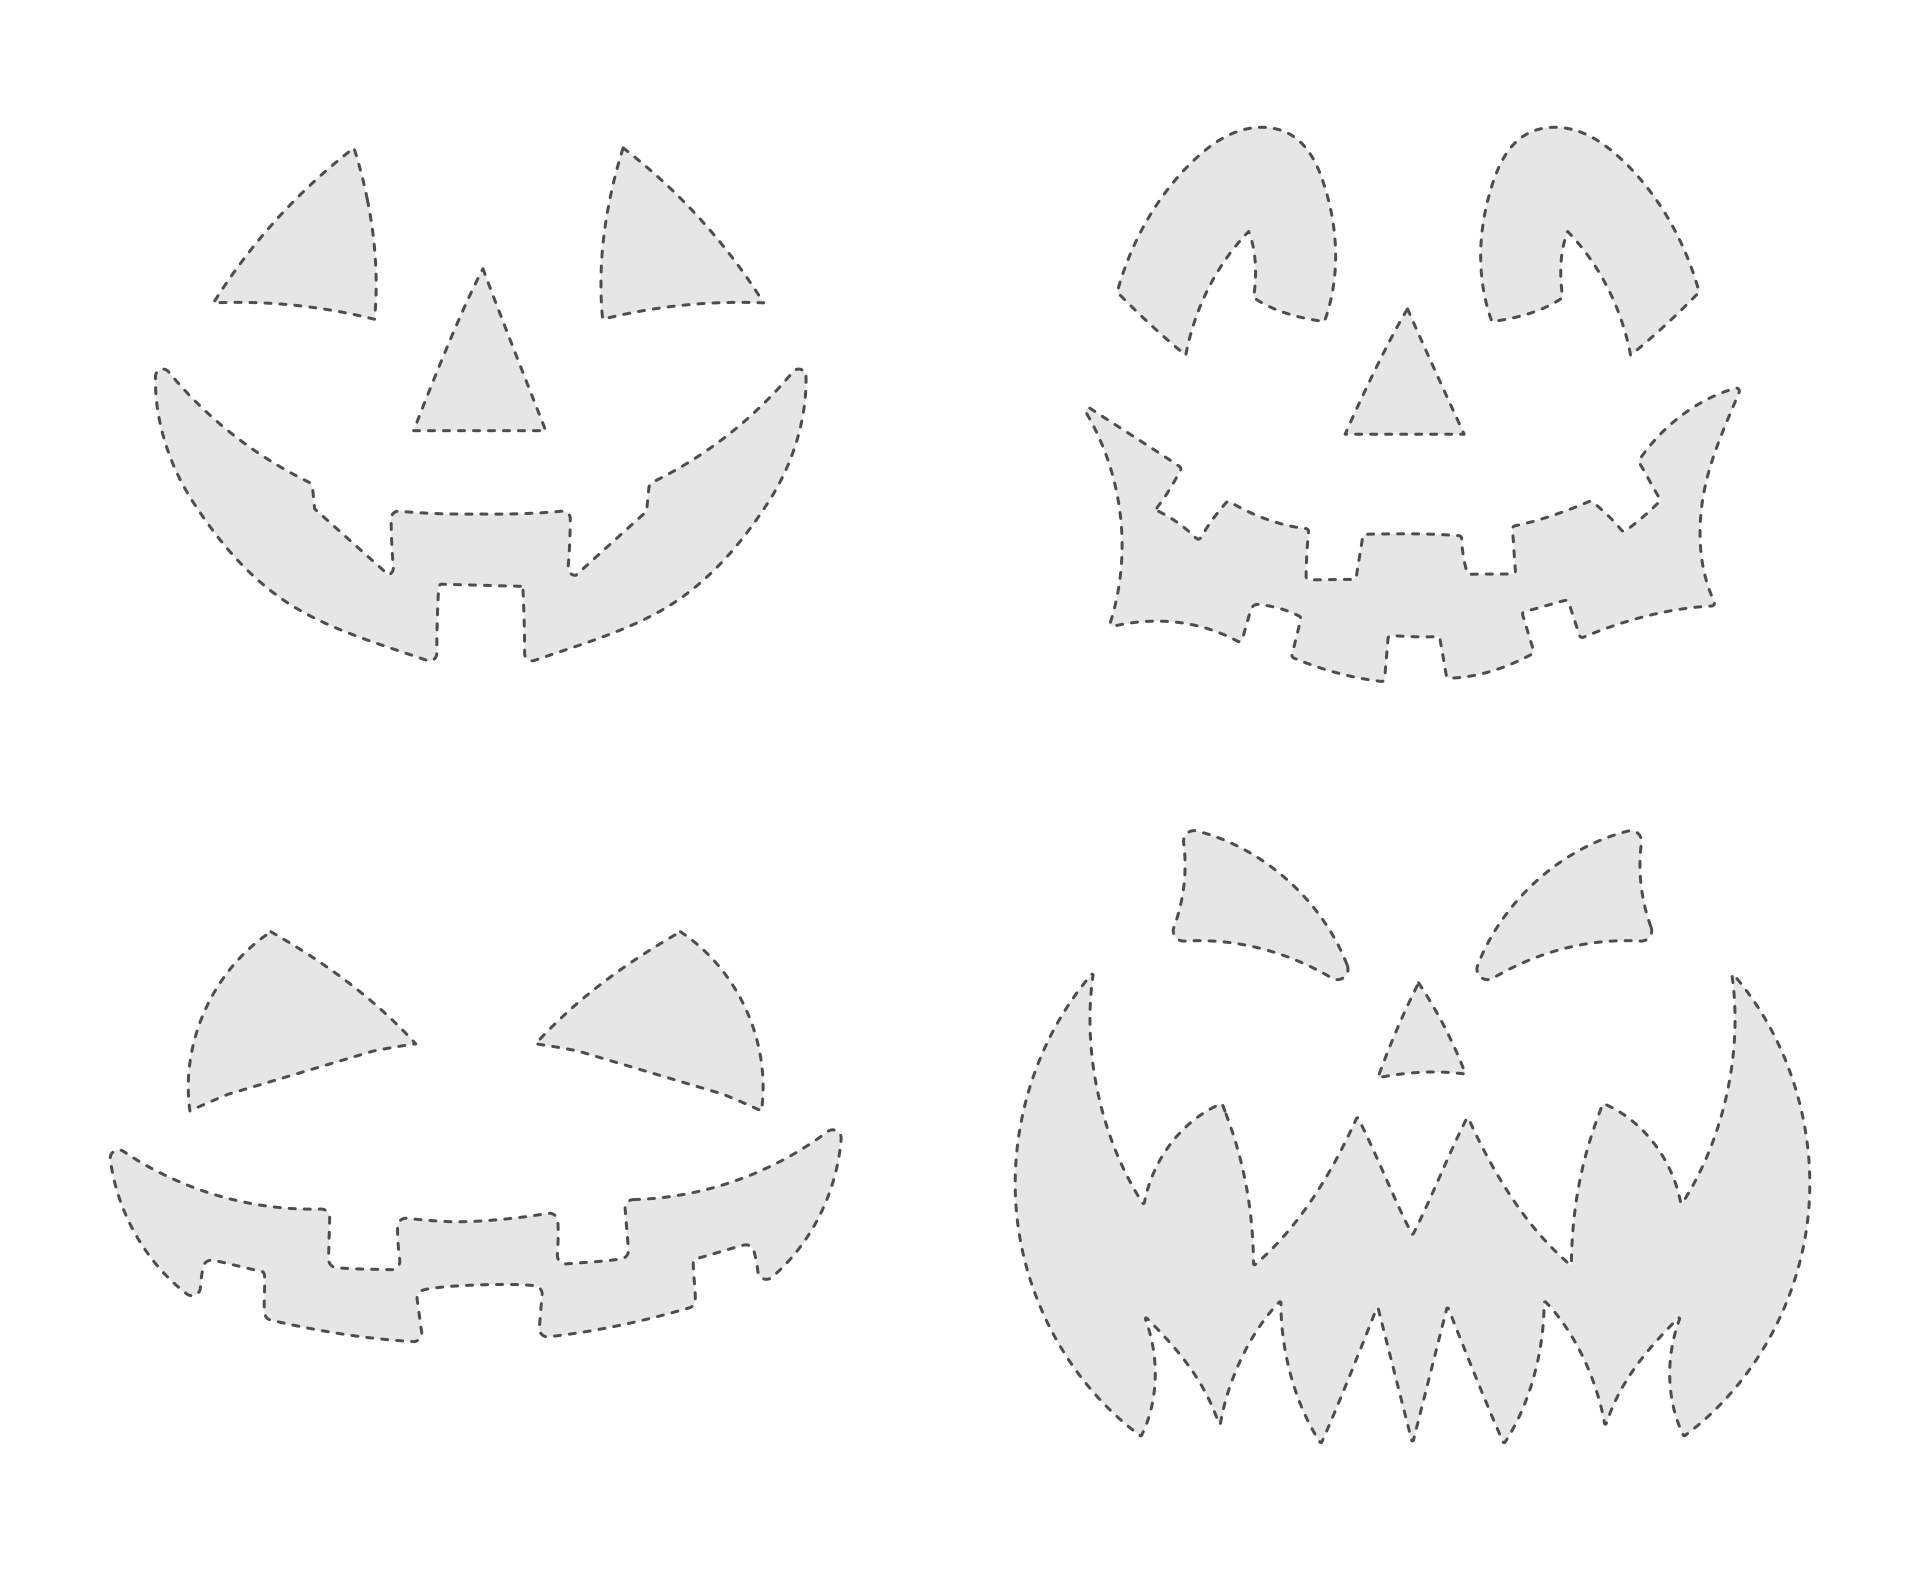 Printable Halloween Pumpkin Stencils